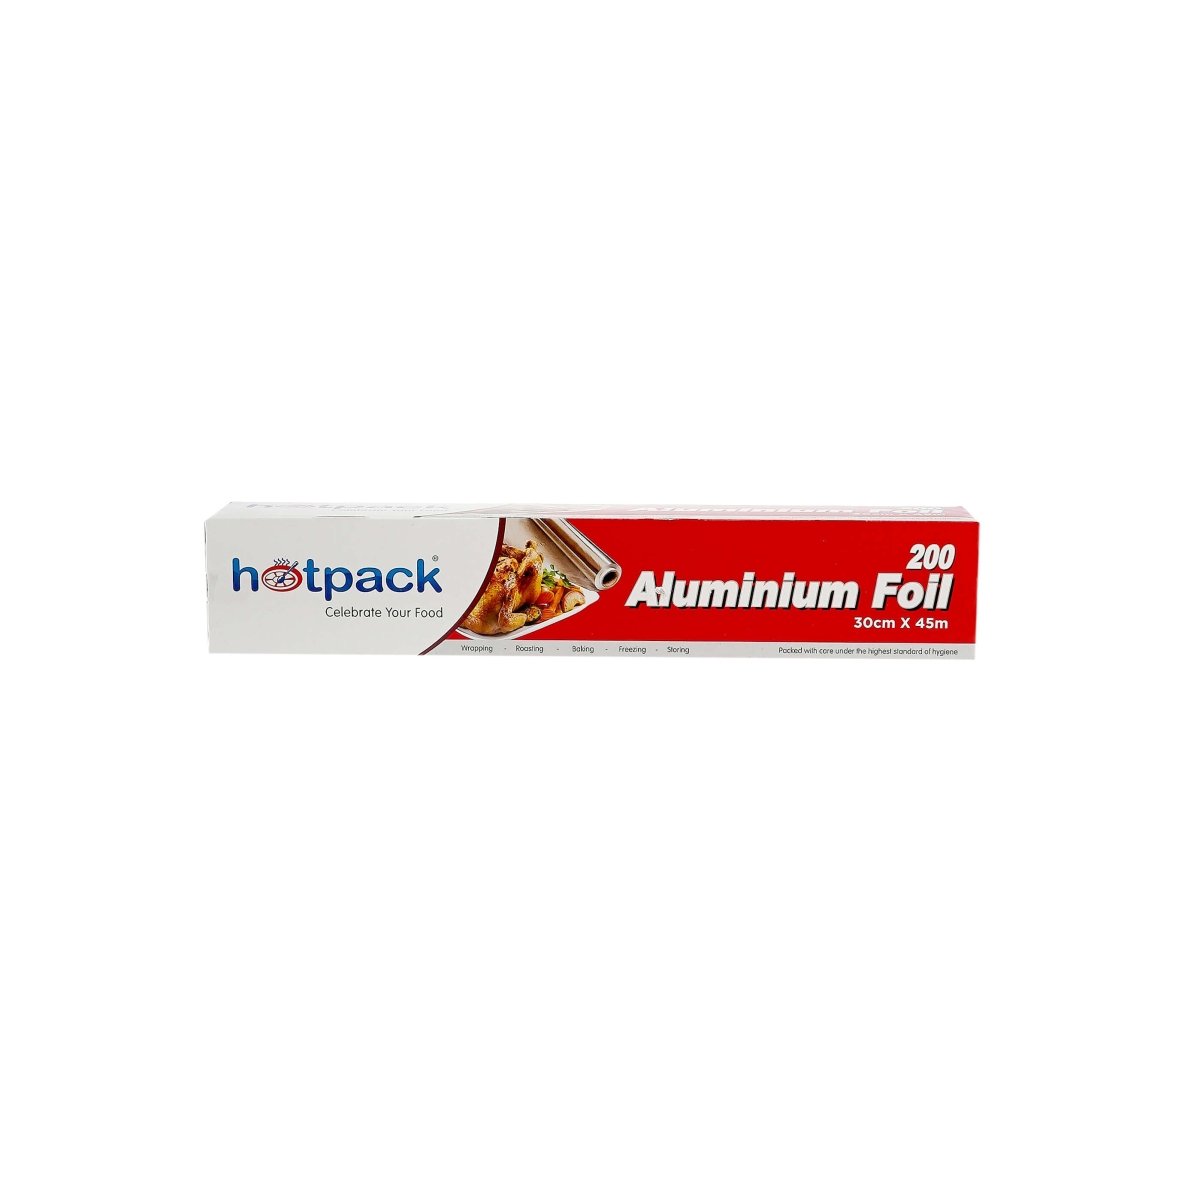 Aluminium foil - hotpackwebstore.com - Aluminium Foil